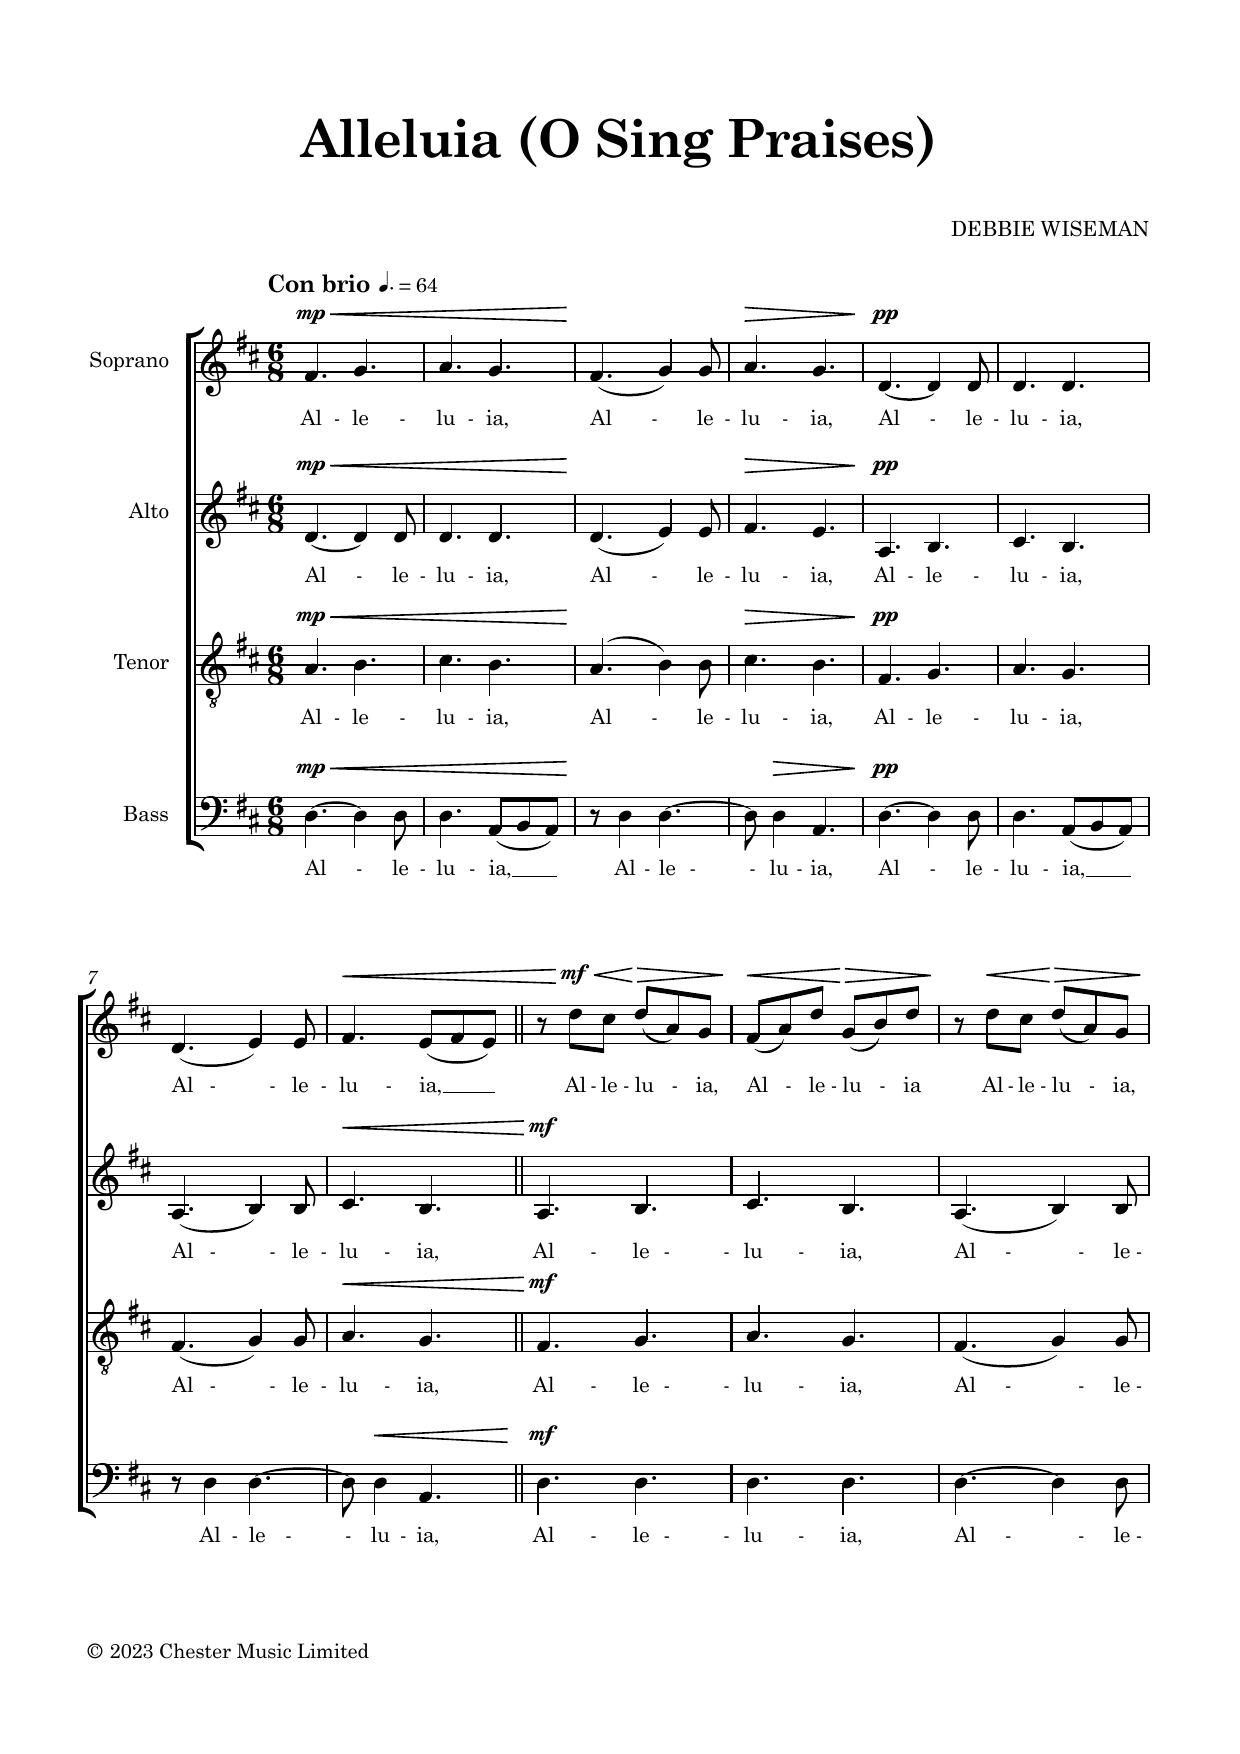 Debbie Wiseman Alleluia (O Sing Praises) Sheet Music Notes & Chords for SATB Choir - Download or Print PDF